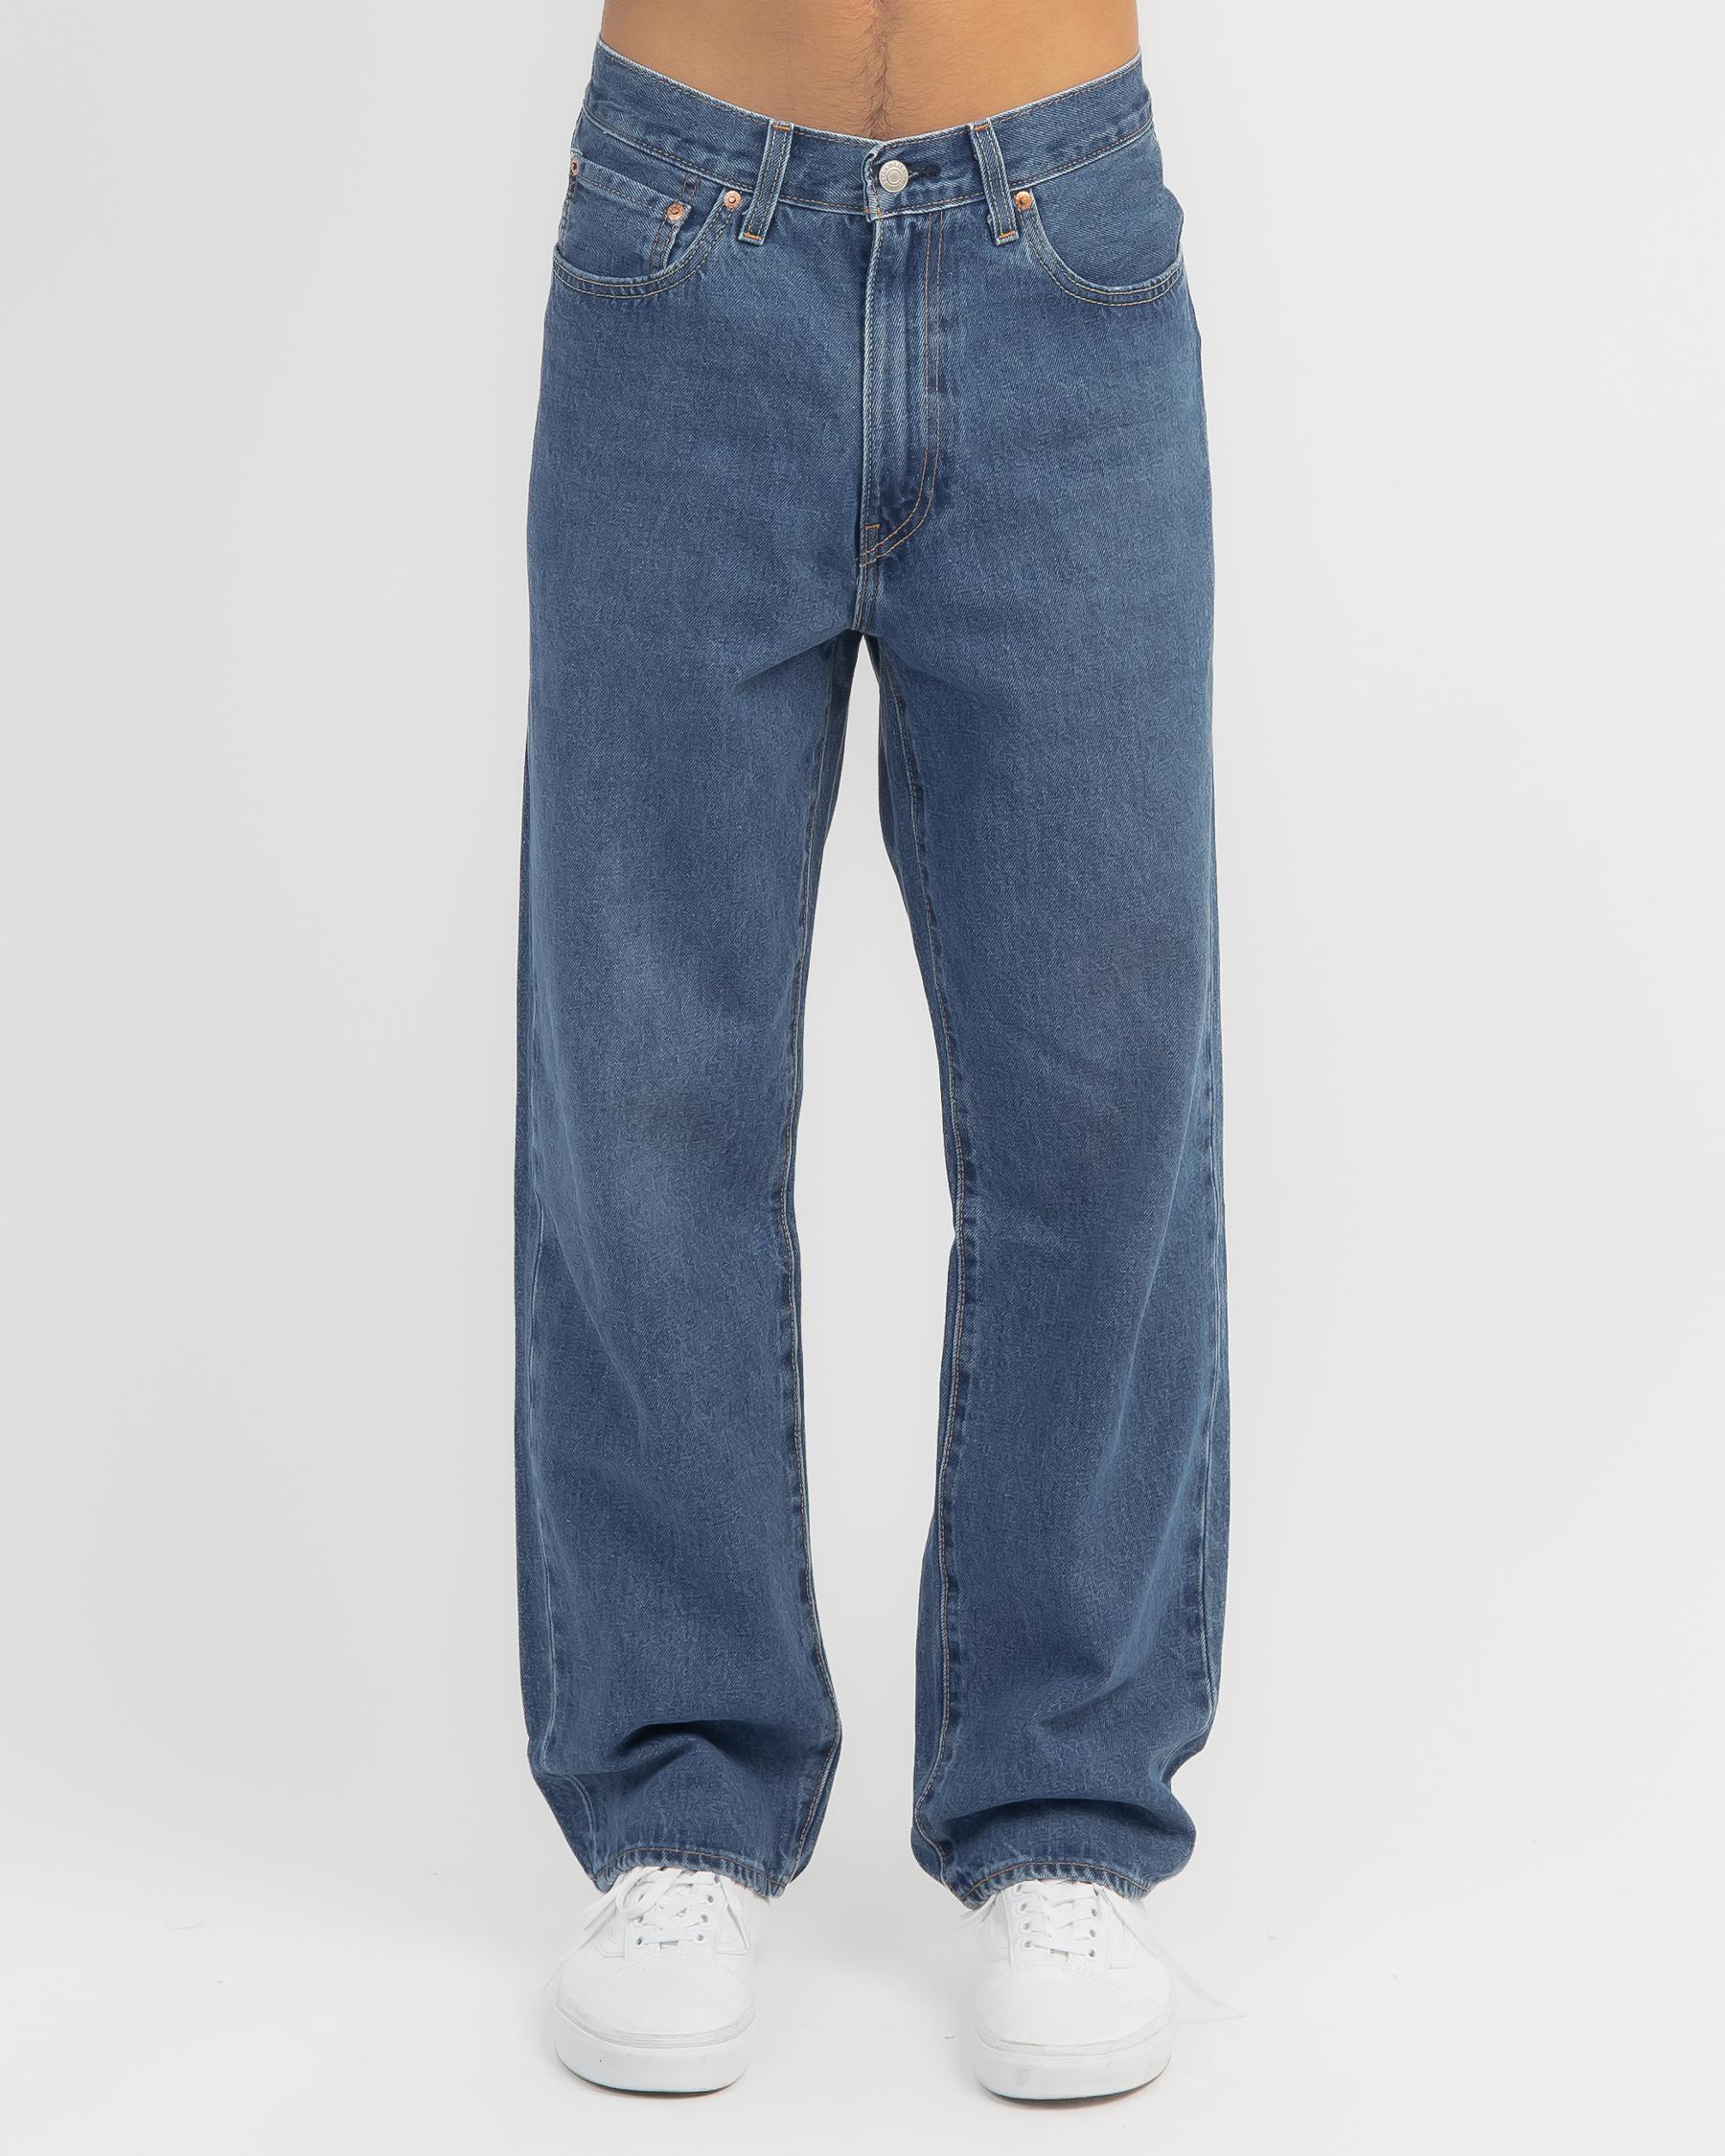 Levi's Stay Loose Denim Jeans In Medium Indigo - Fast Shipping & Easy ...